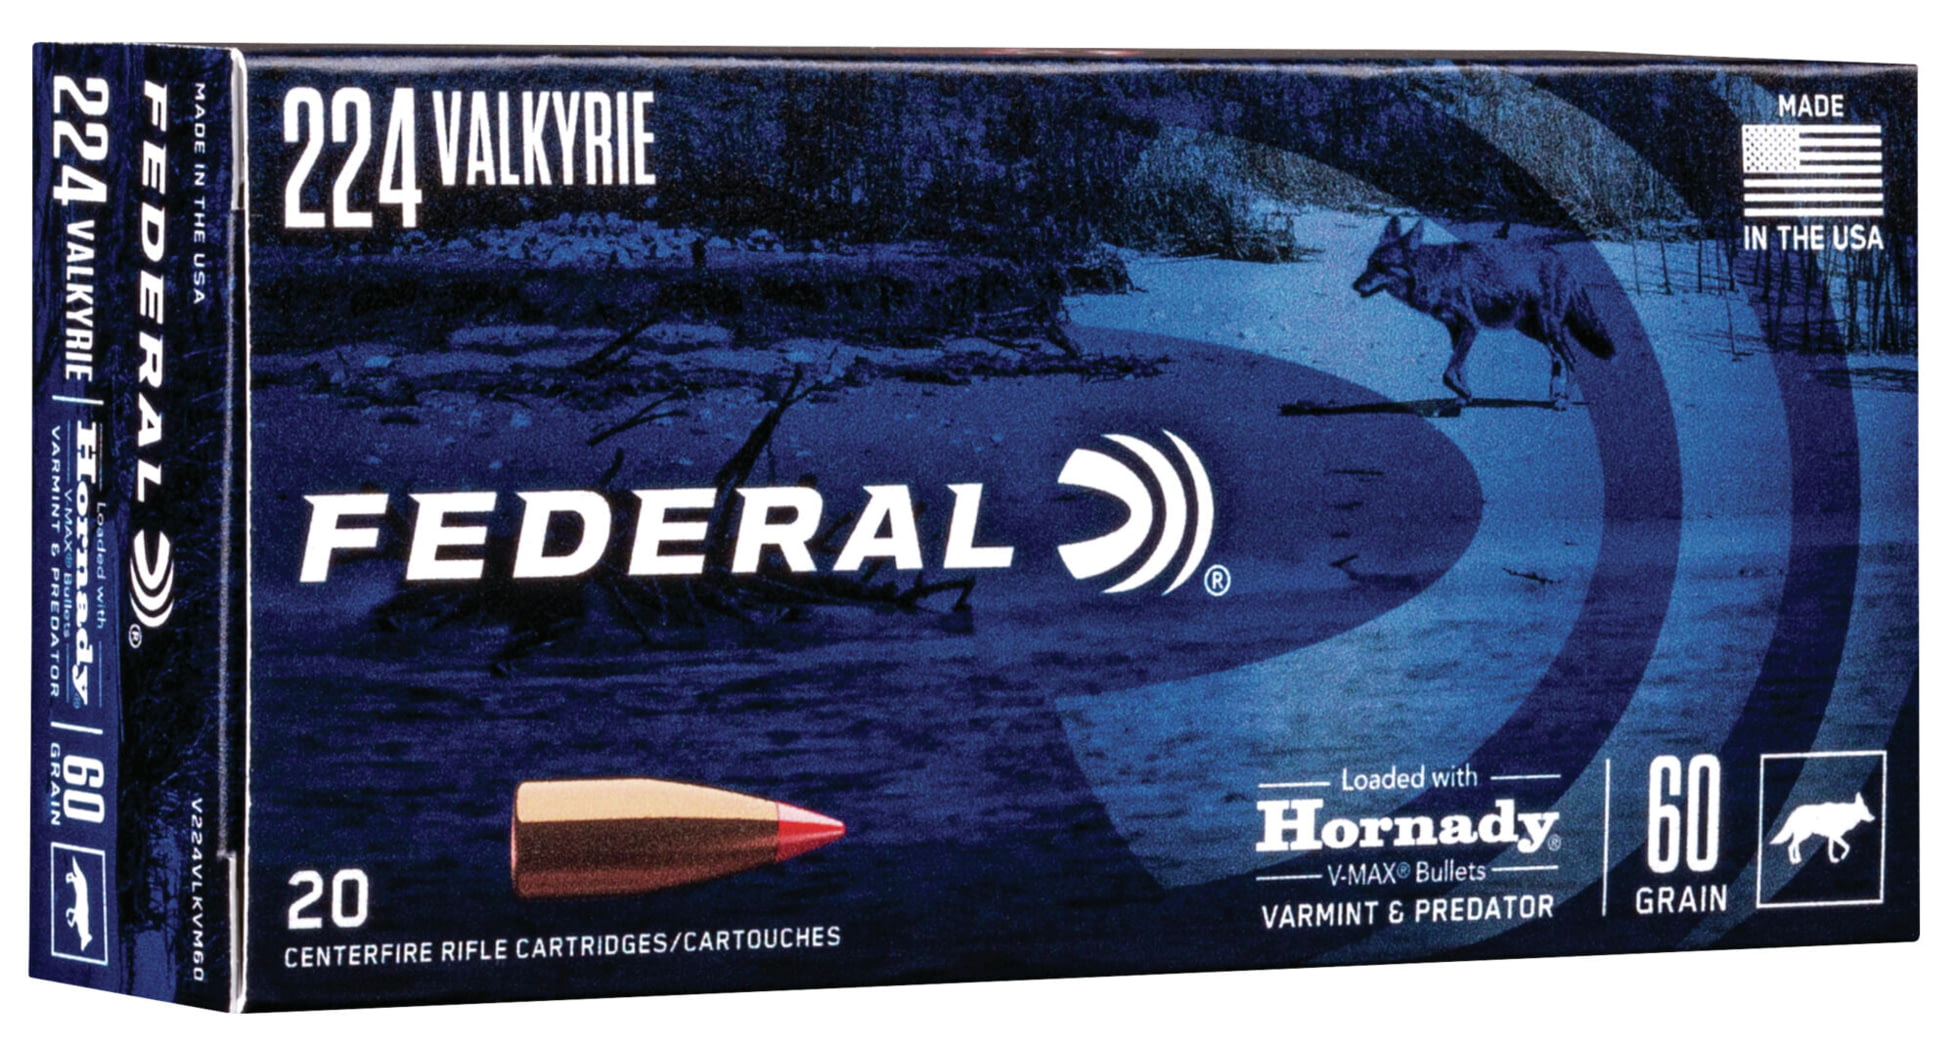 Federal Premium HORNDAY V-MAX BULK .224 Valkyrie 60 grain Hornady V-Max Centerfire Rifle Ammunition